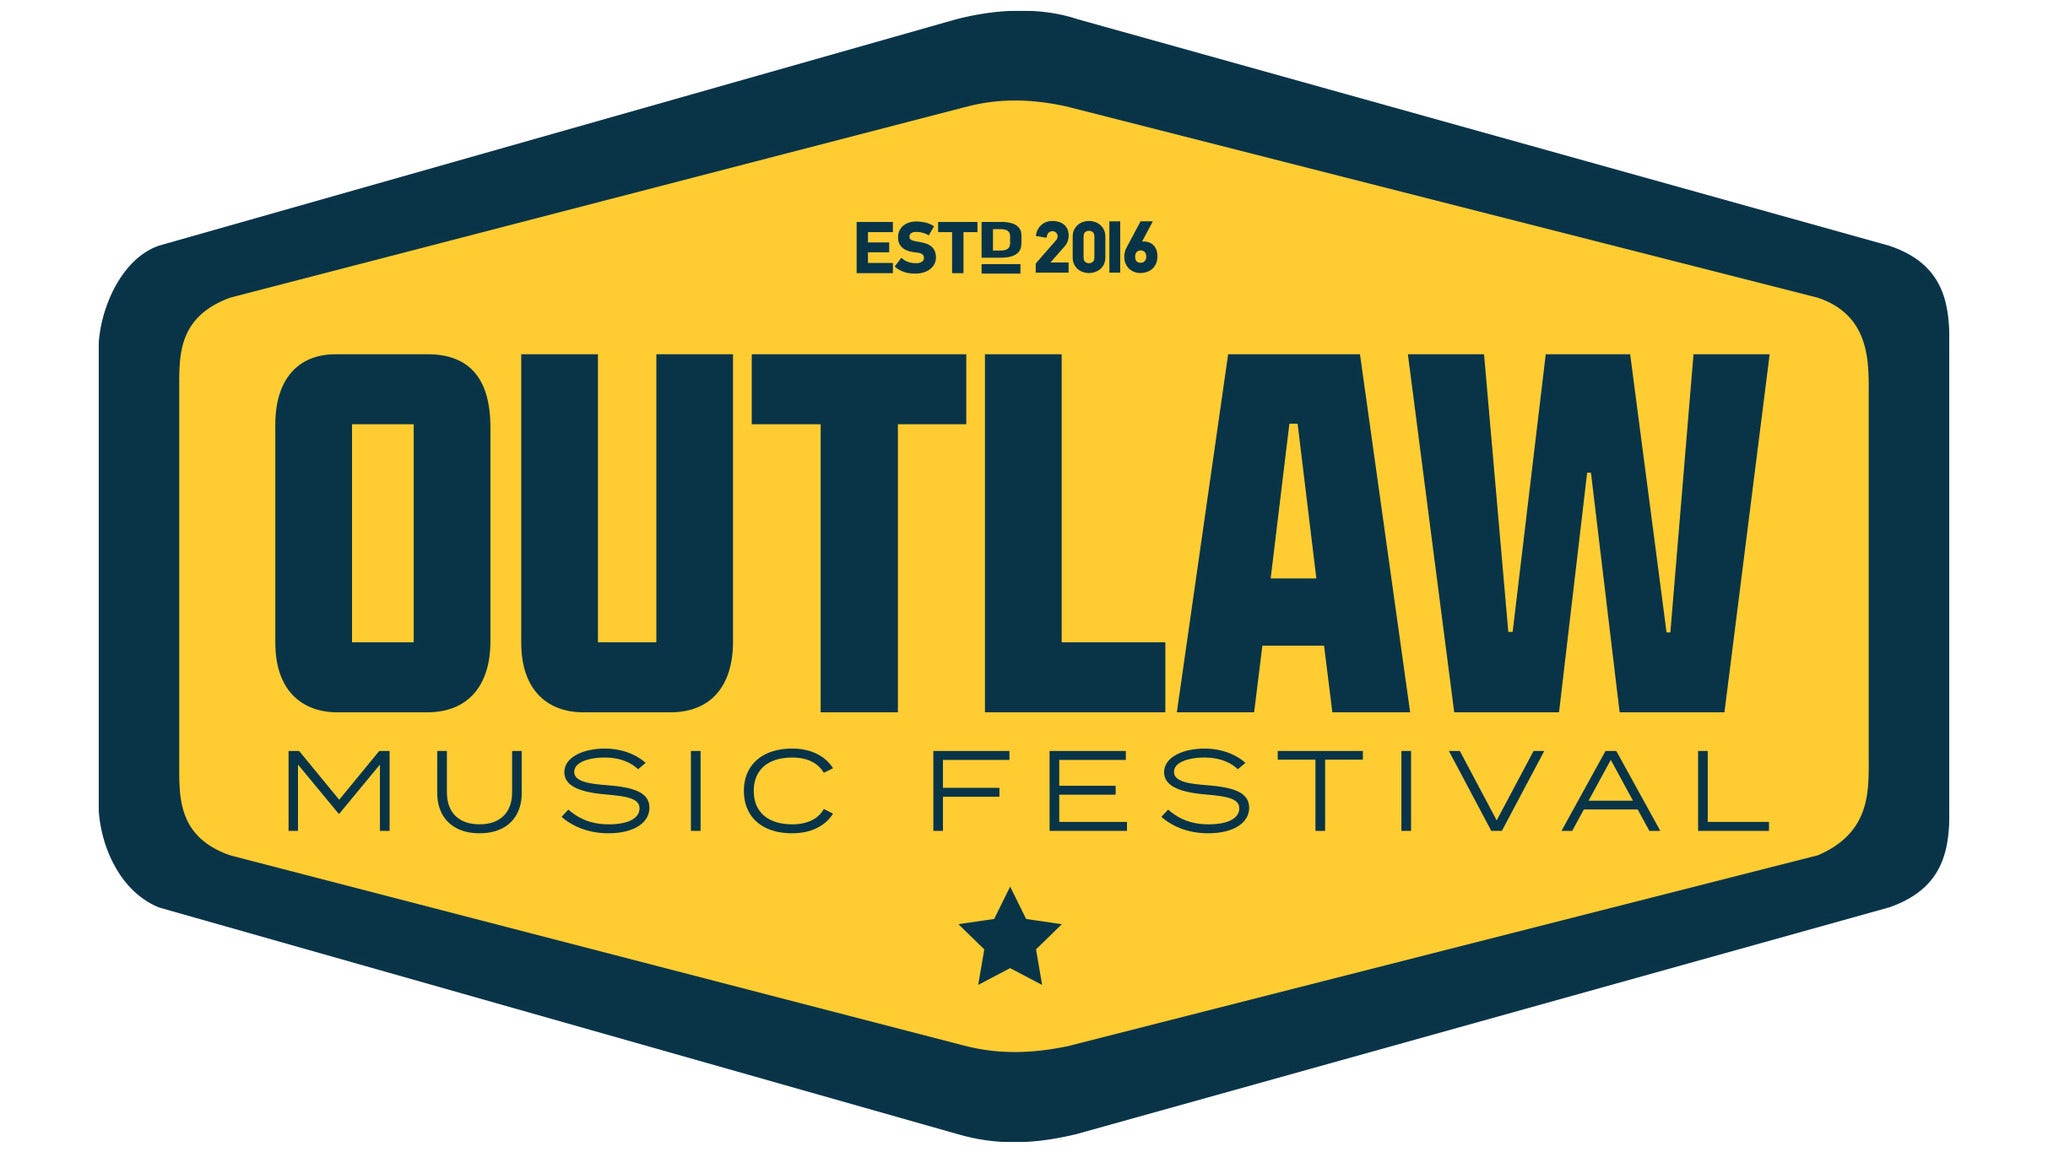 Outlaw ft: Willie Nelson, The Avett Brothers, Black Pumas & More presale password